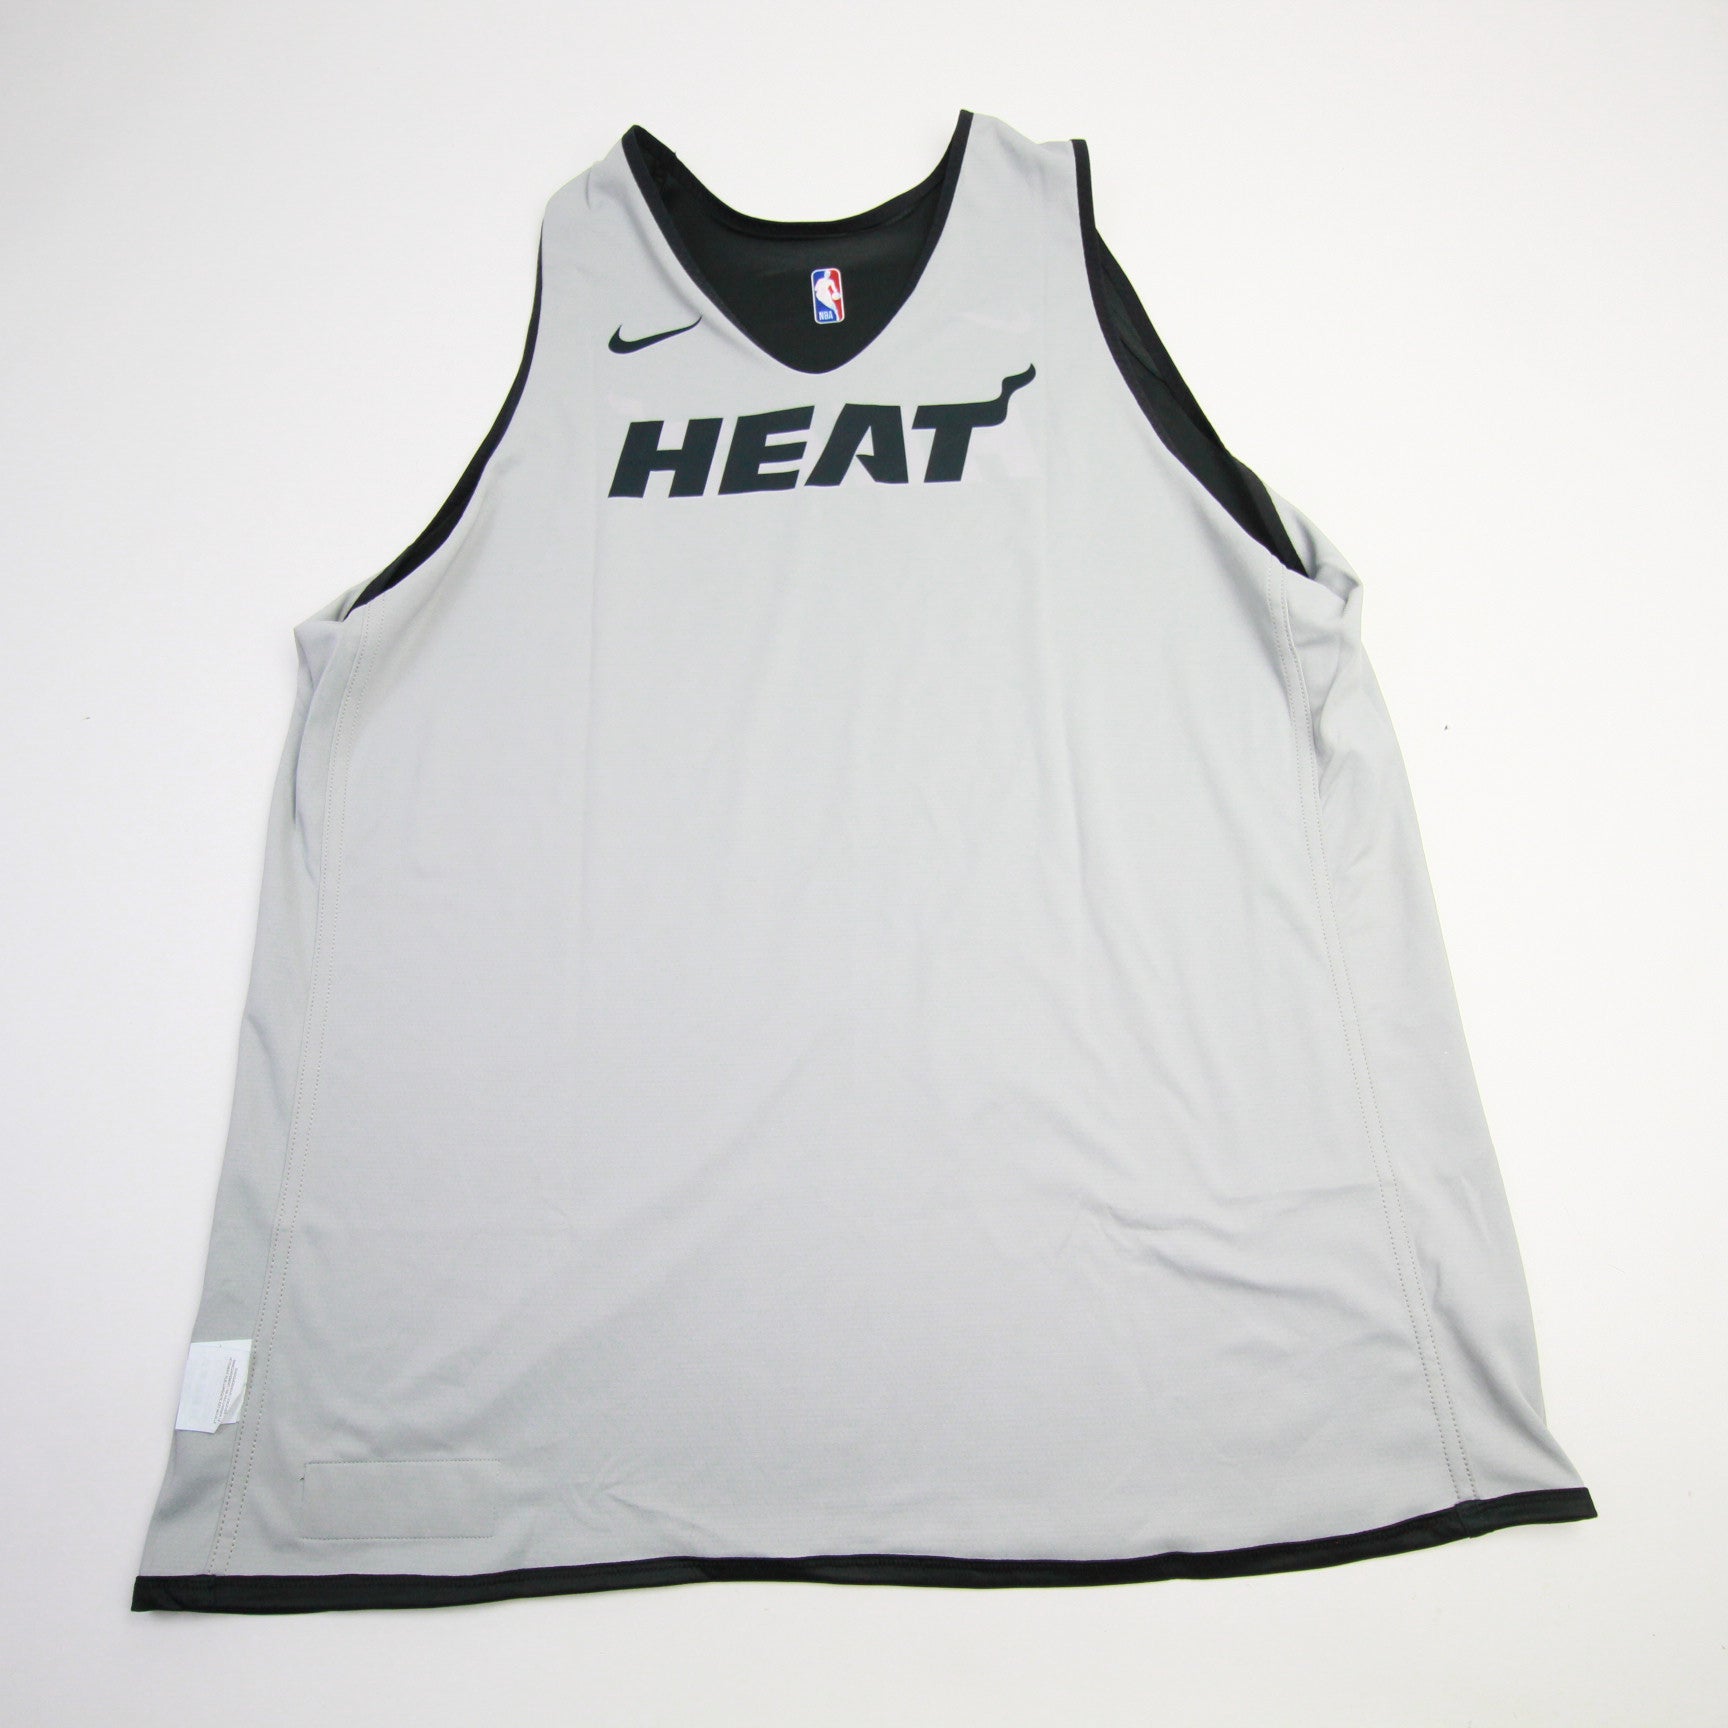 Nike Miami Heat NBA Jerseys for sale